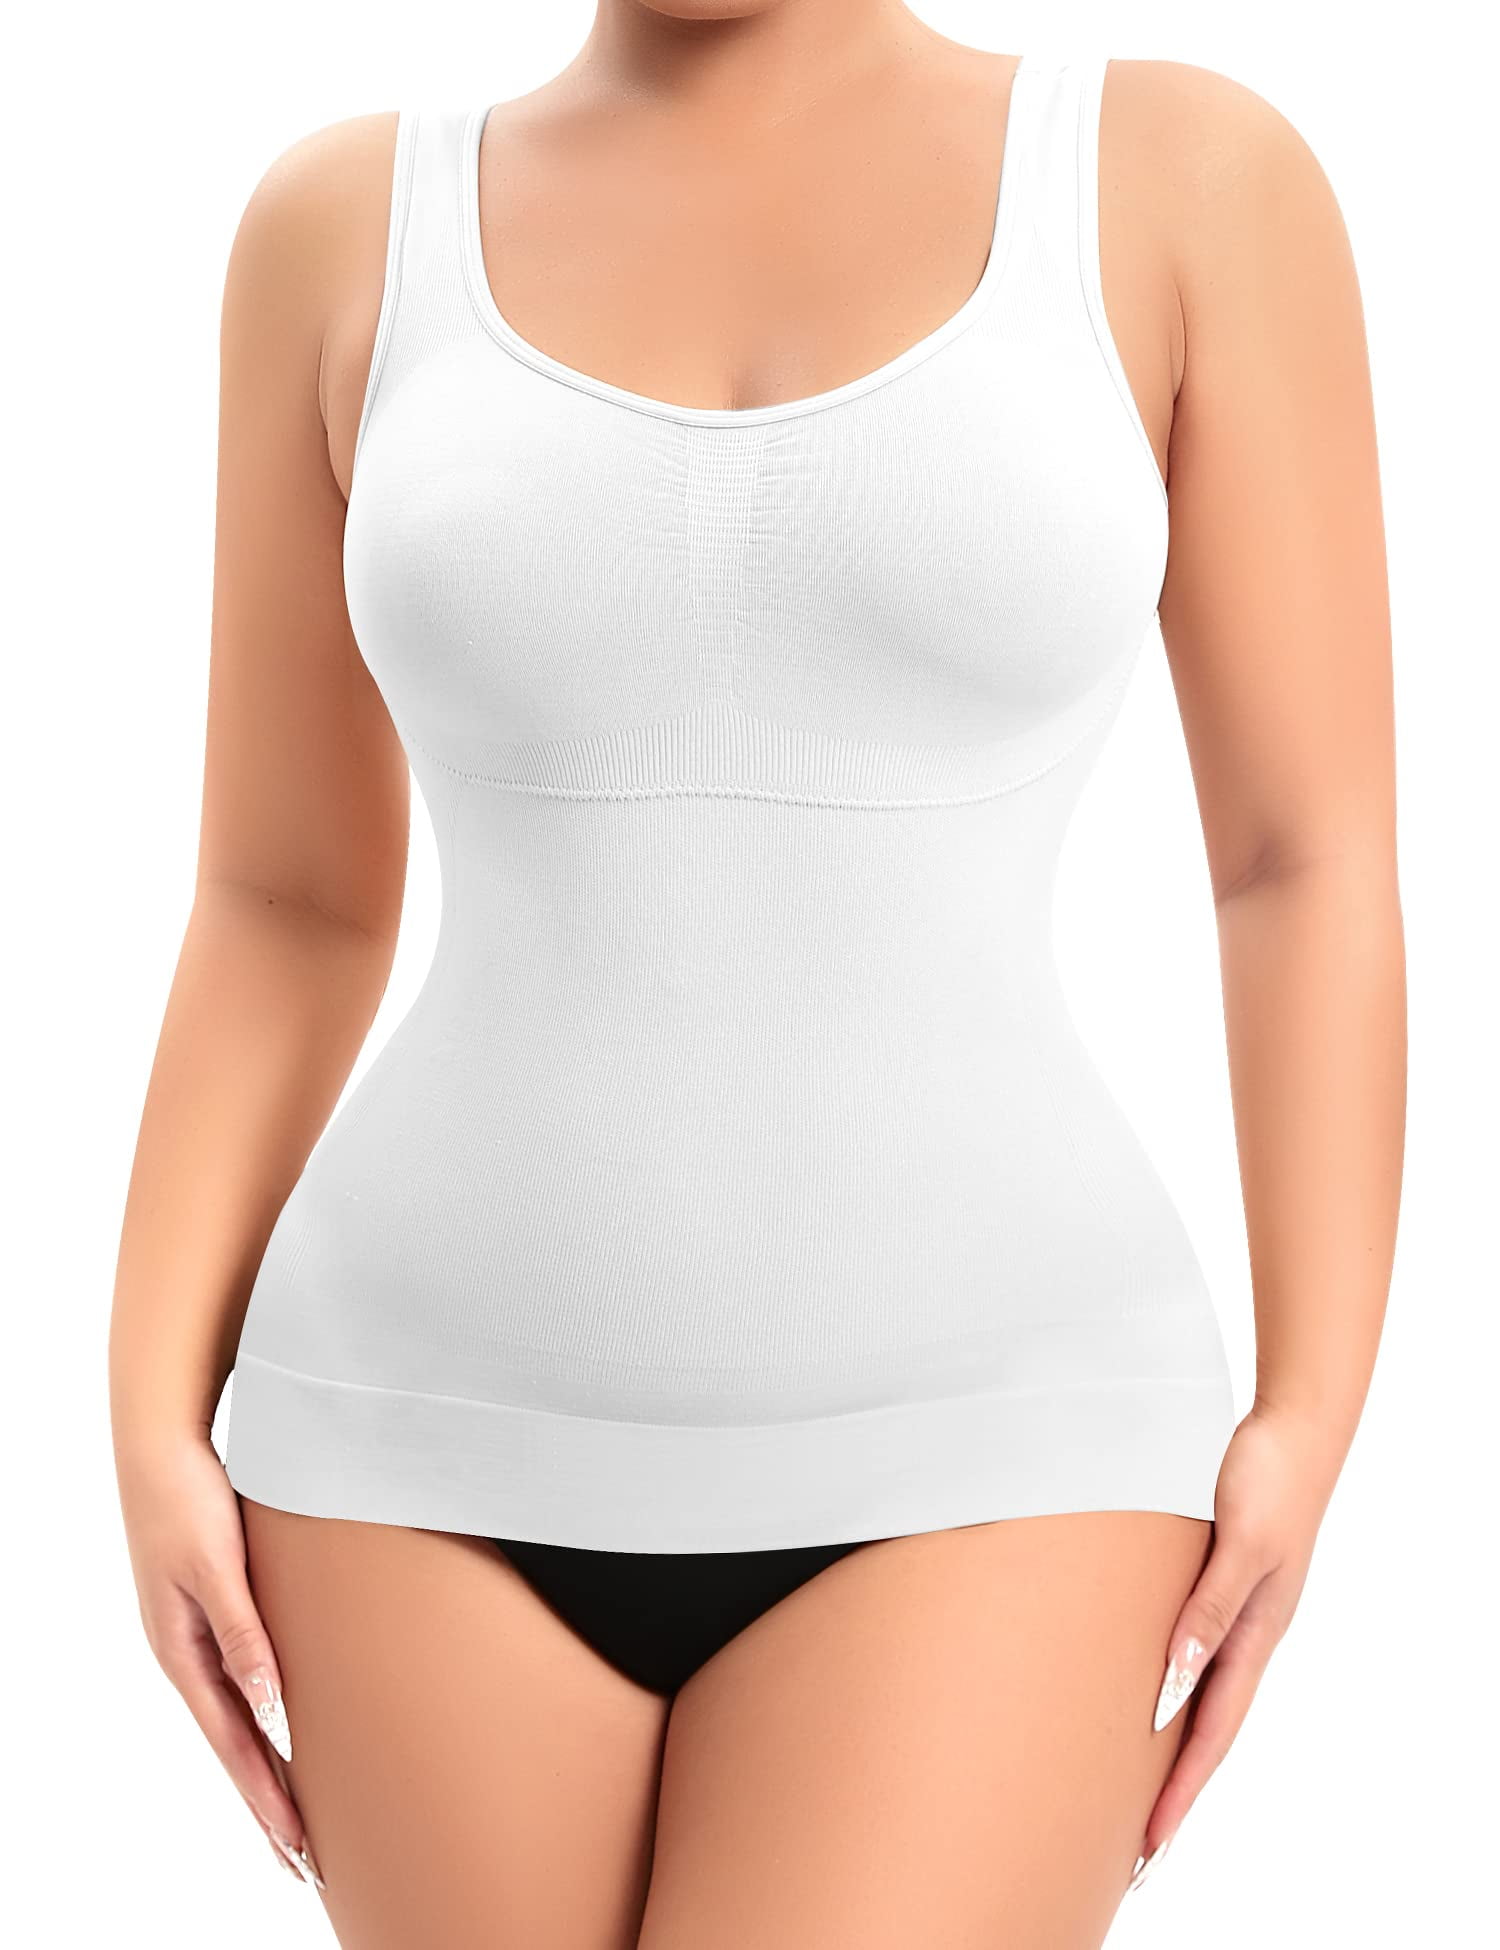  JOYSHAPER Cami Shaper For Women Tummy Control Shapewear Tank  Tops